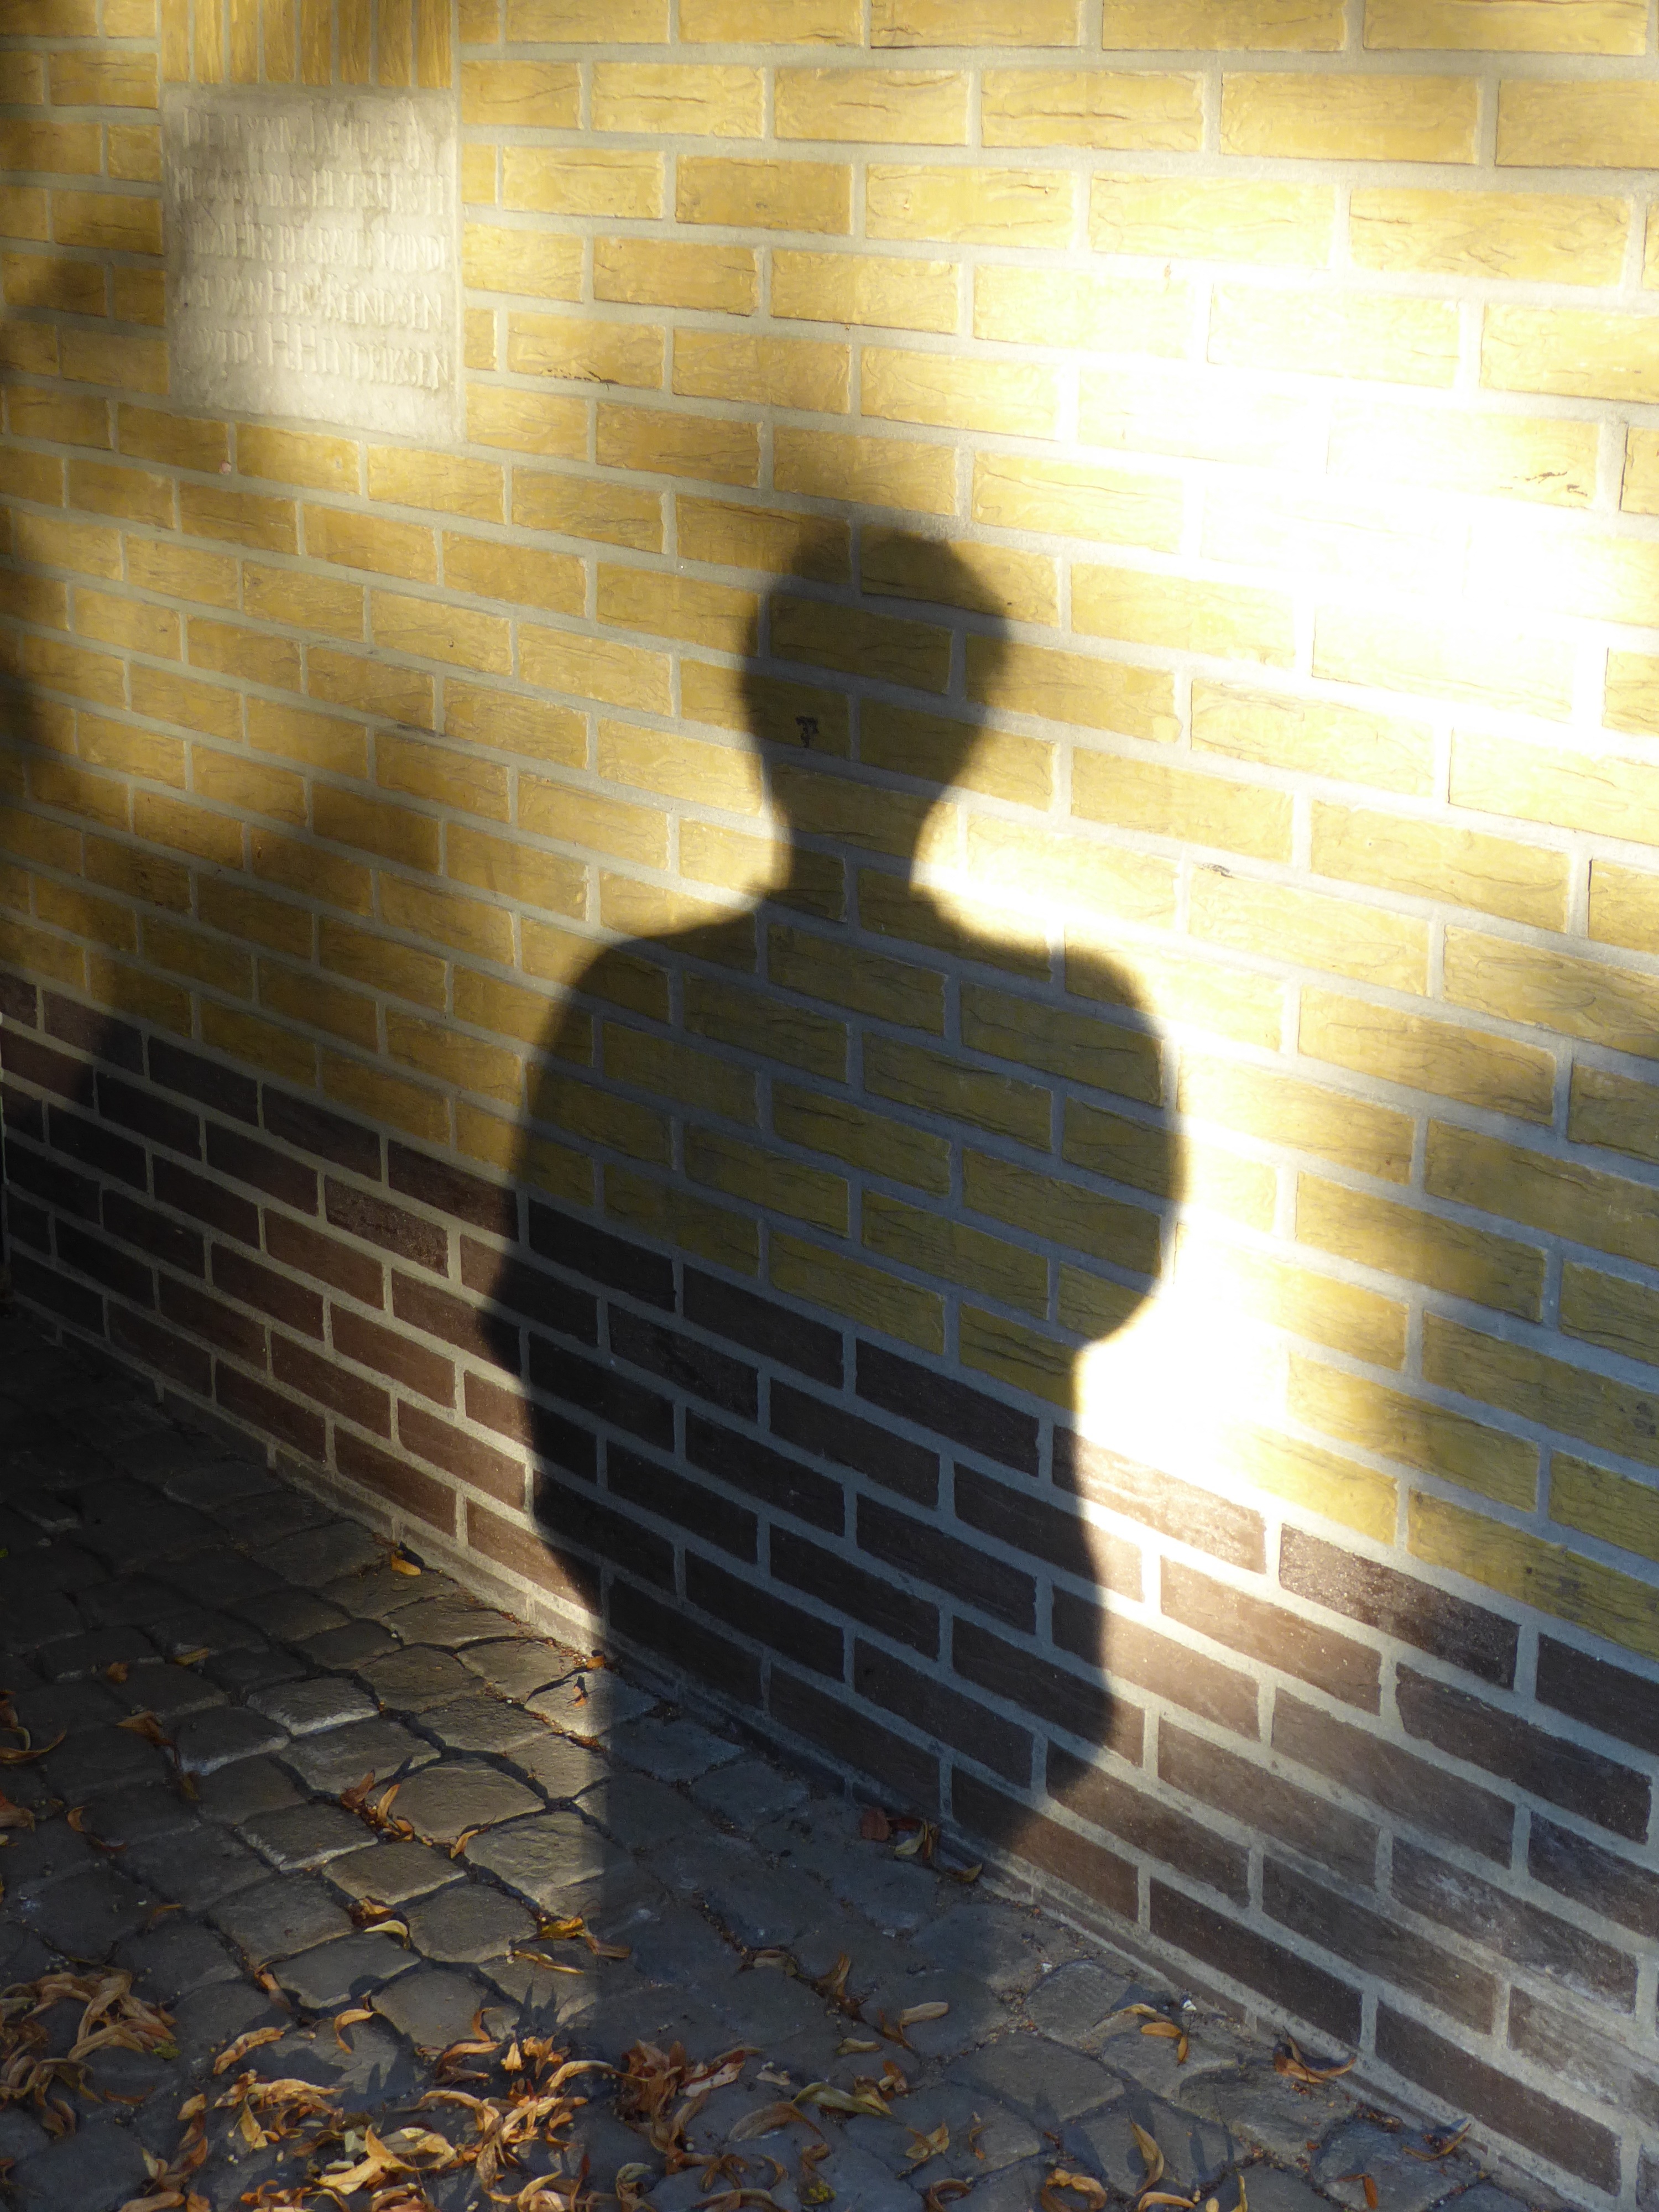 The man from the shadow. Тень человека на стене. Тень мужчины на стене. В тени человека. Красивая тень человека.